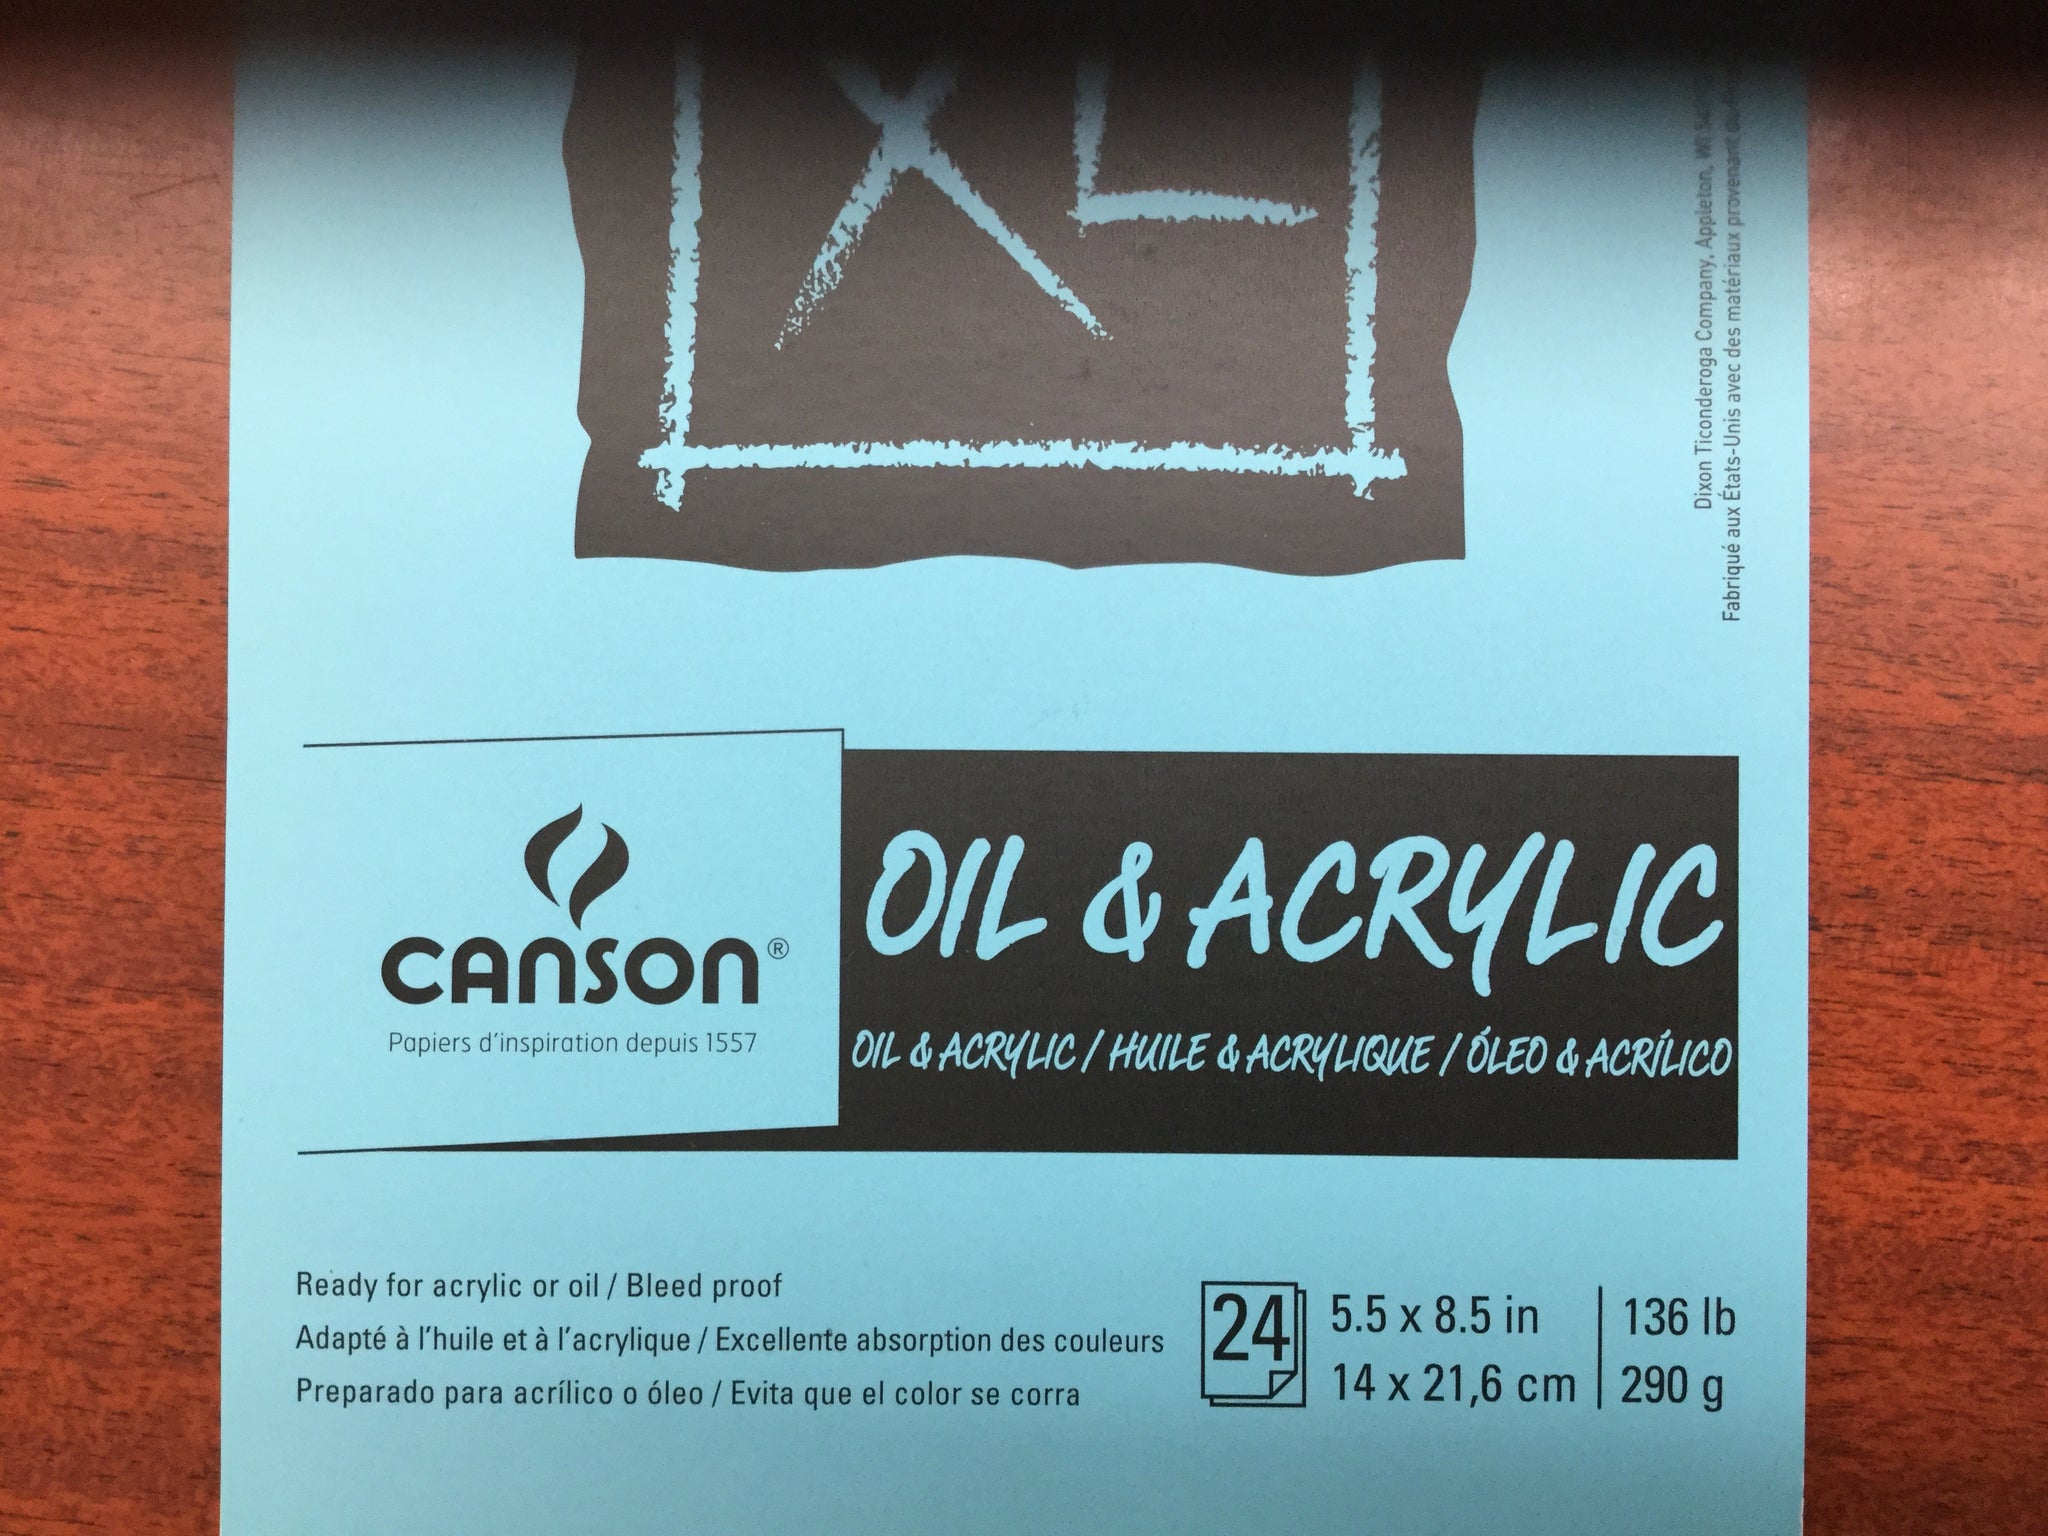 Canson oil & acrylic 136lb 5.5x8.5in